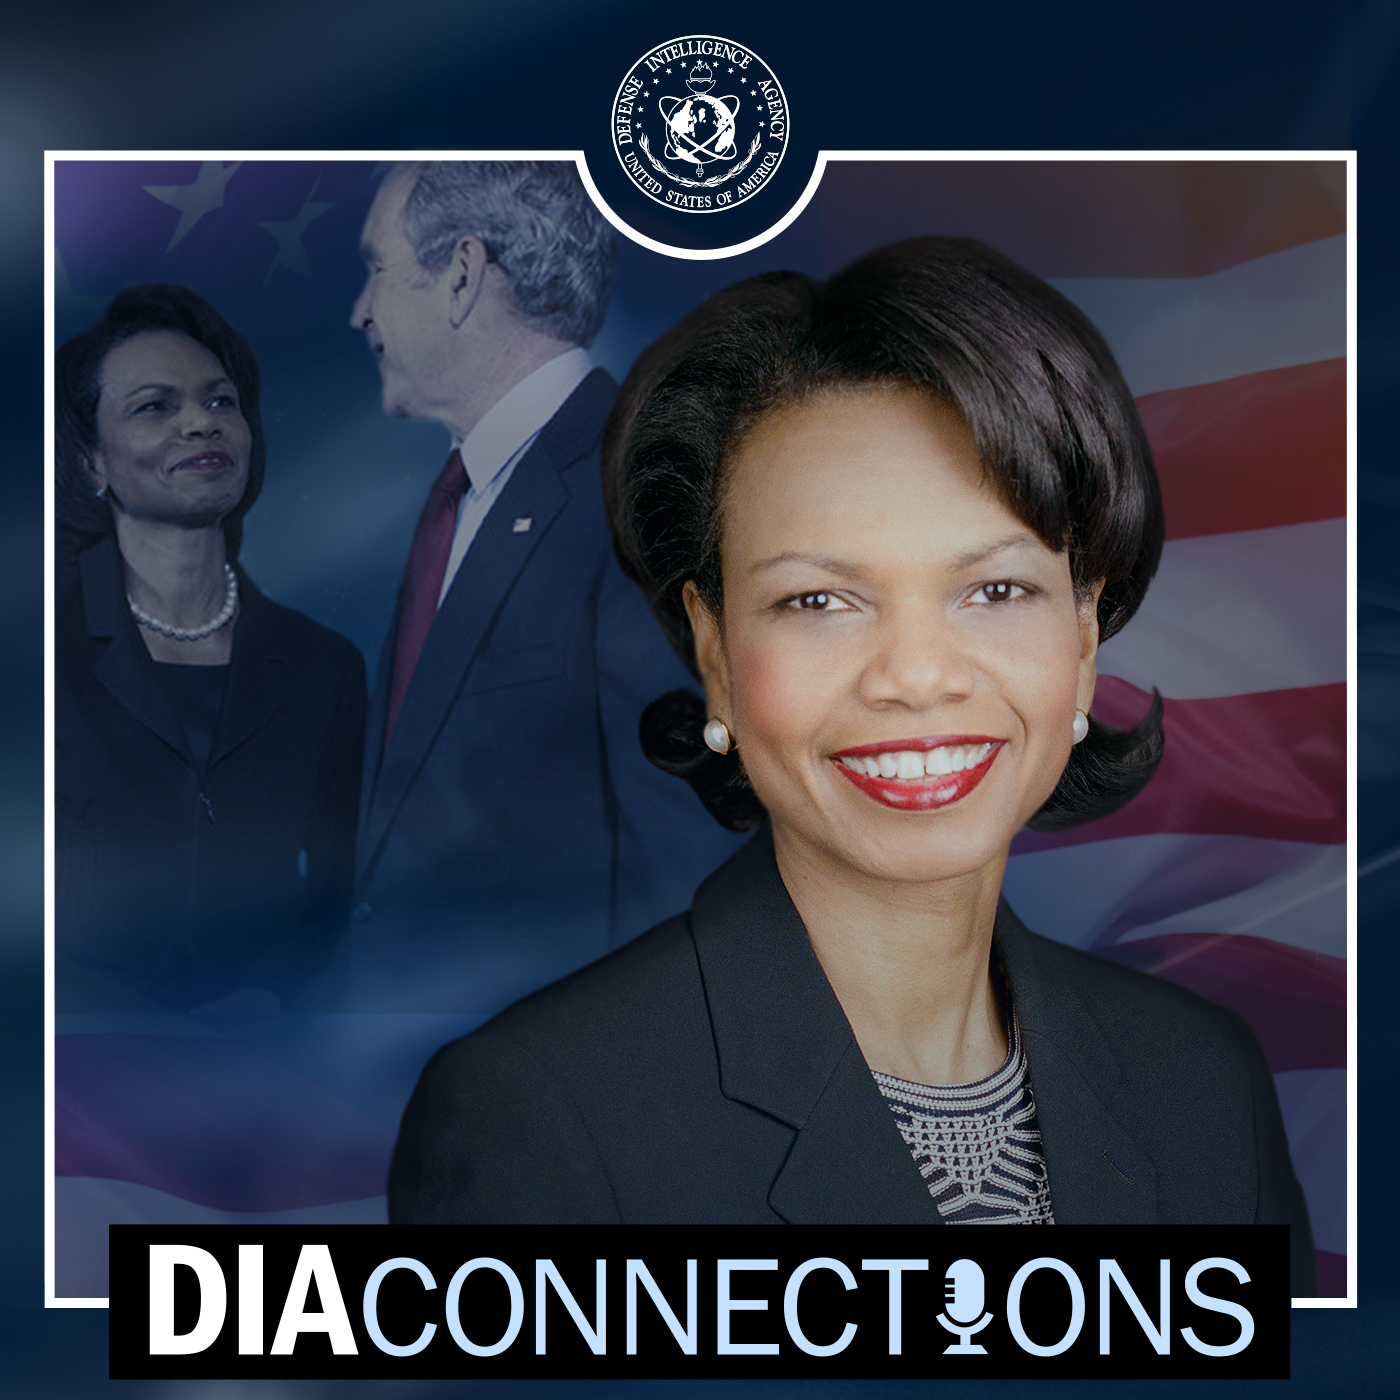 Image portait of Condoleezza Rice.